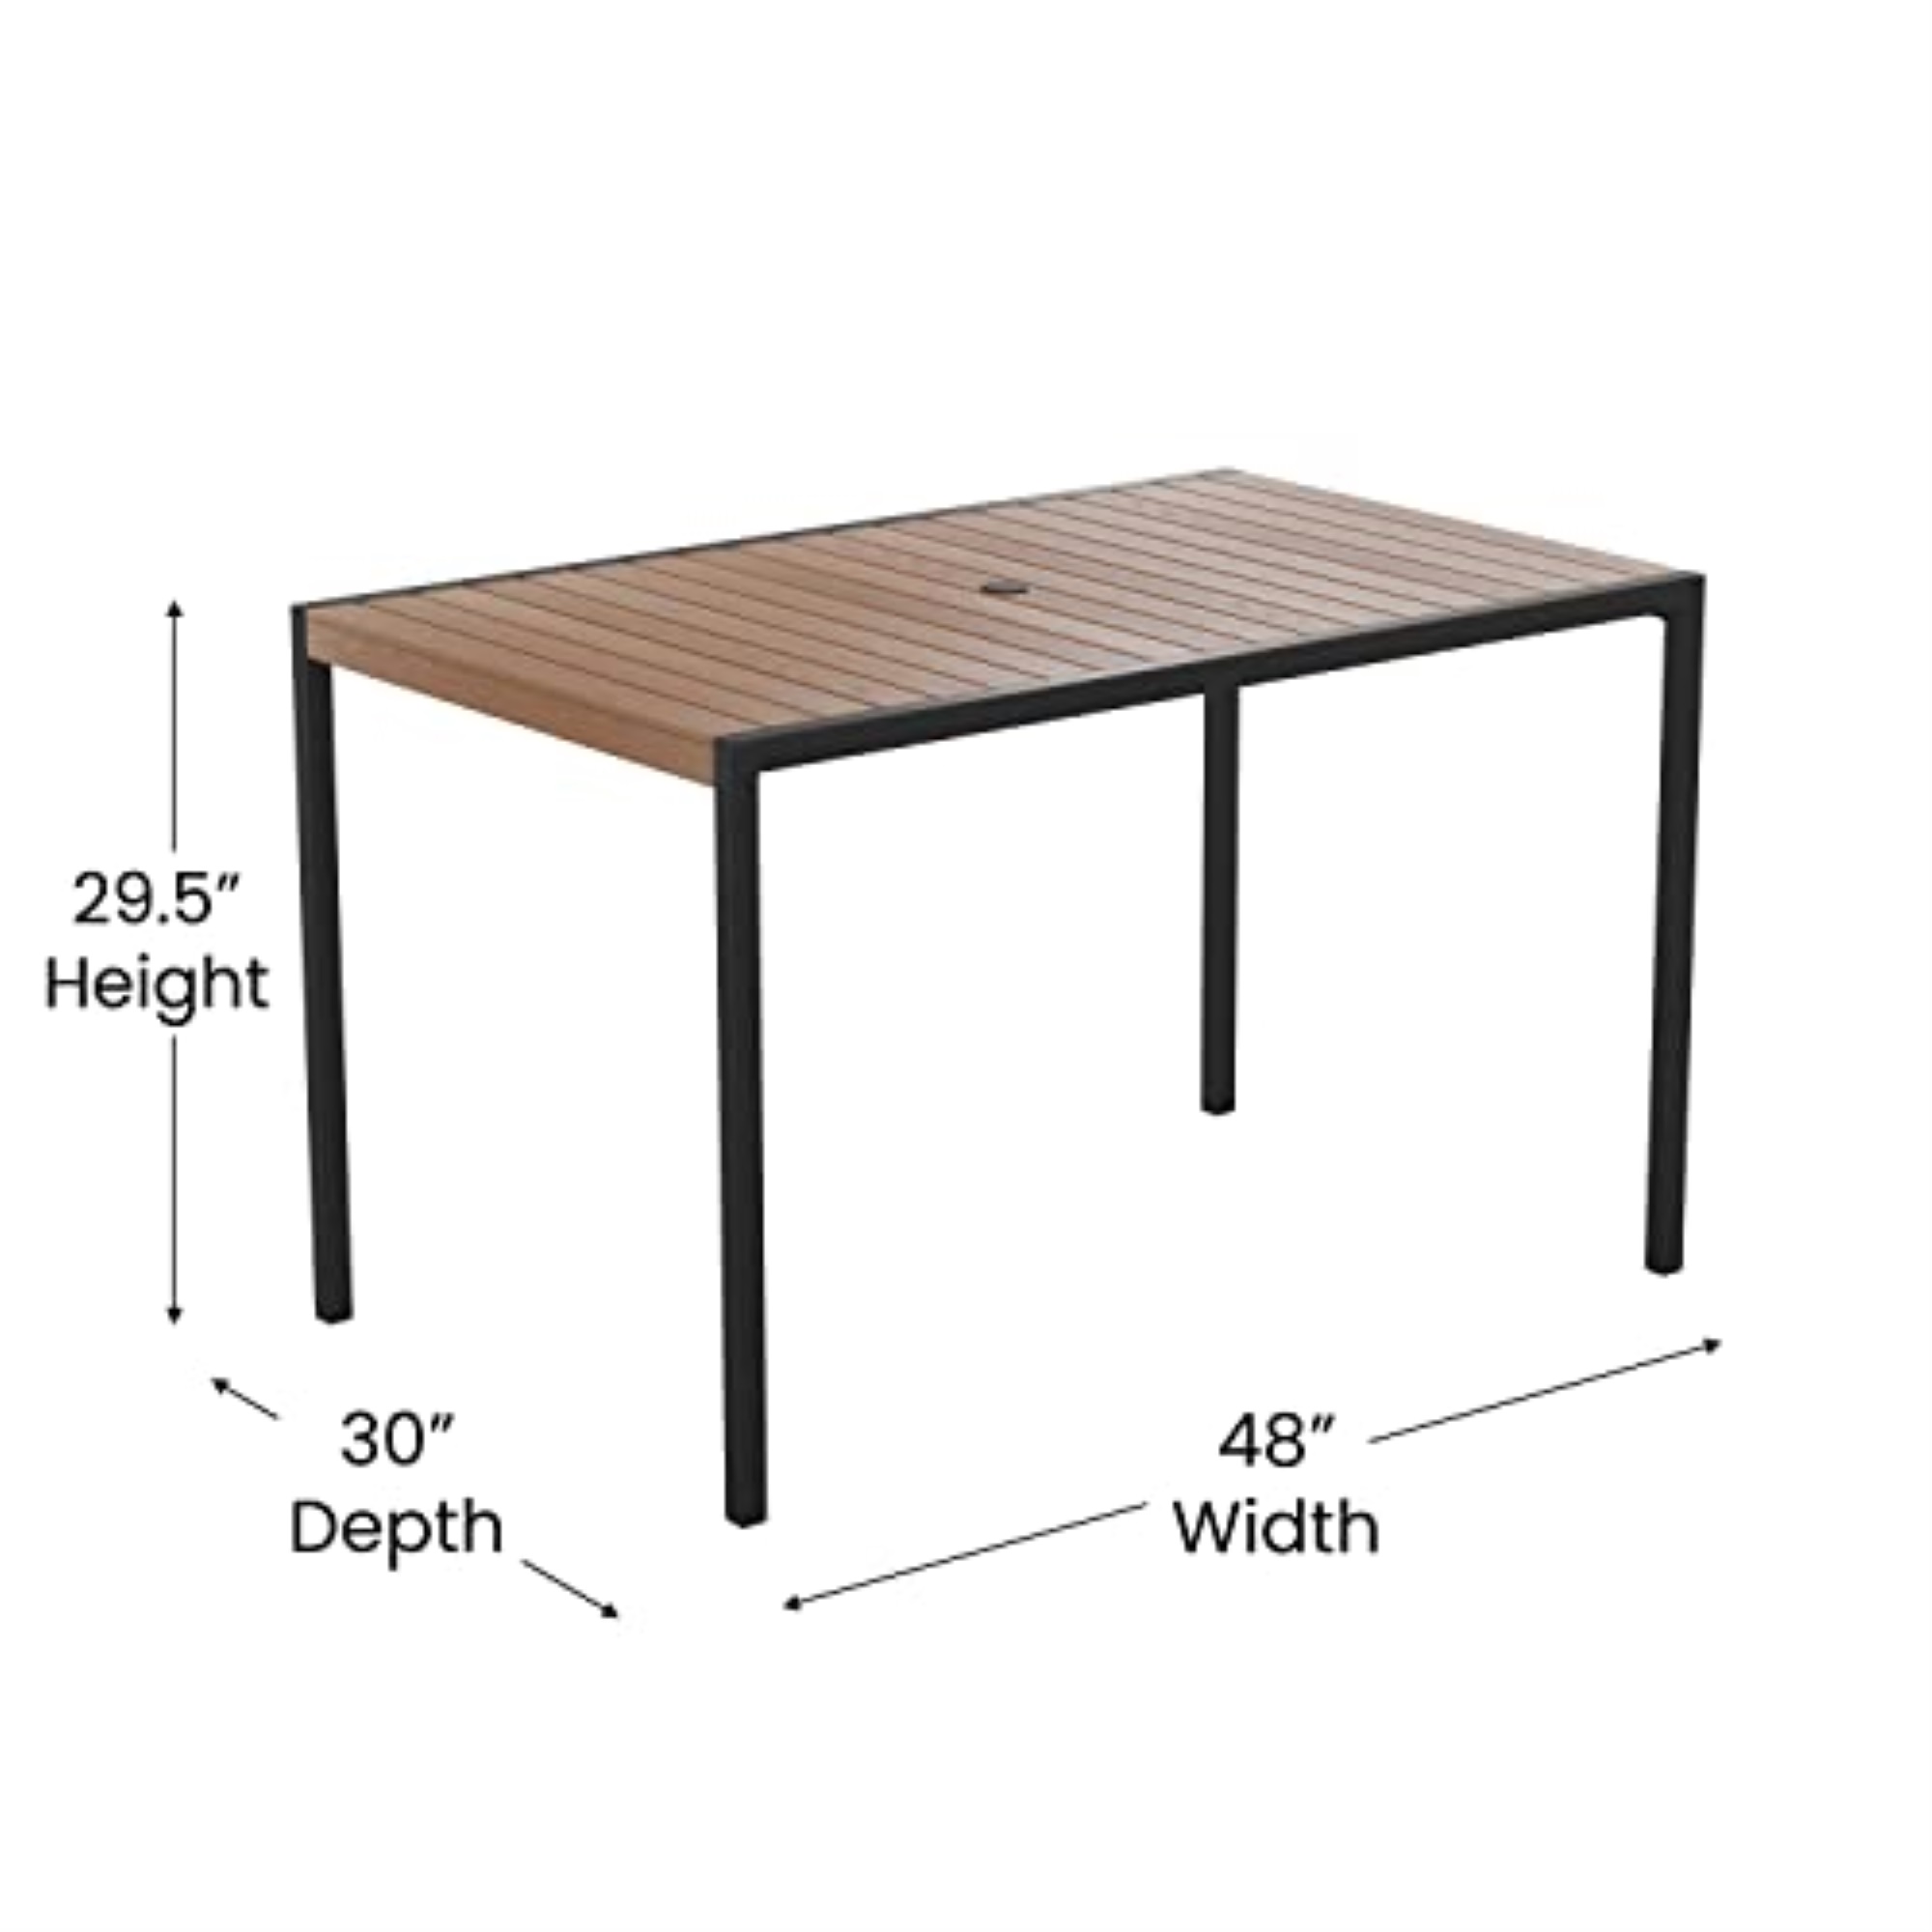 Flash Furniture Lark Series 5-Piece Steel/Aluminum Teak Patio Table and Chair Set, Teak - image 5 of 13